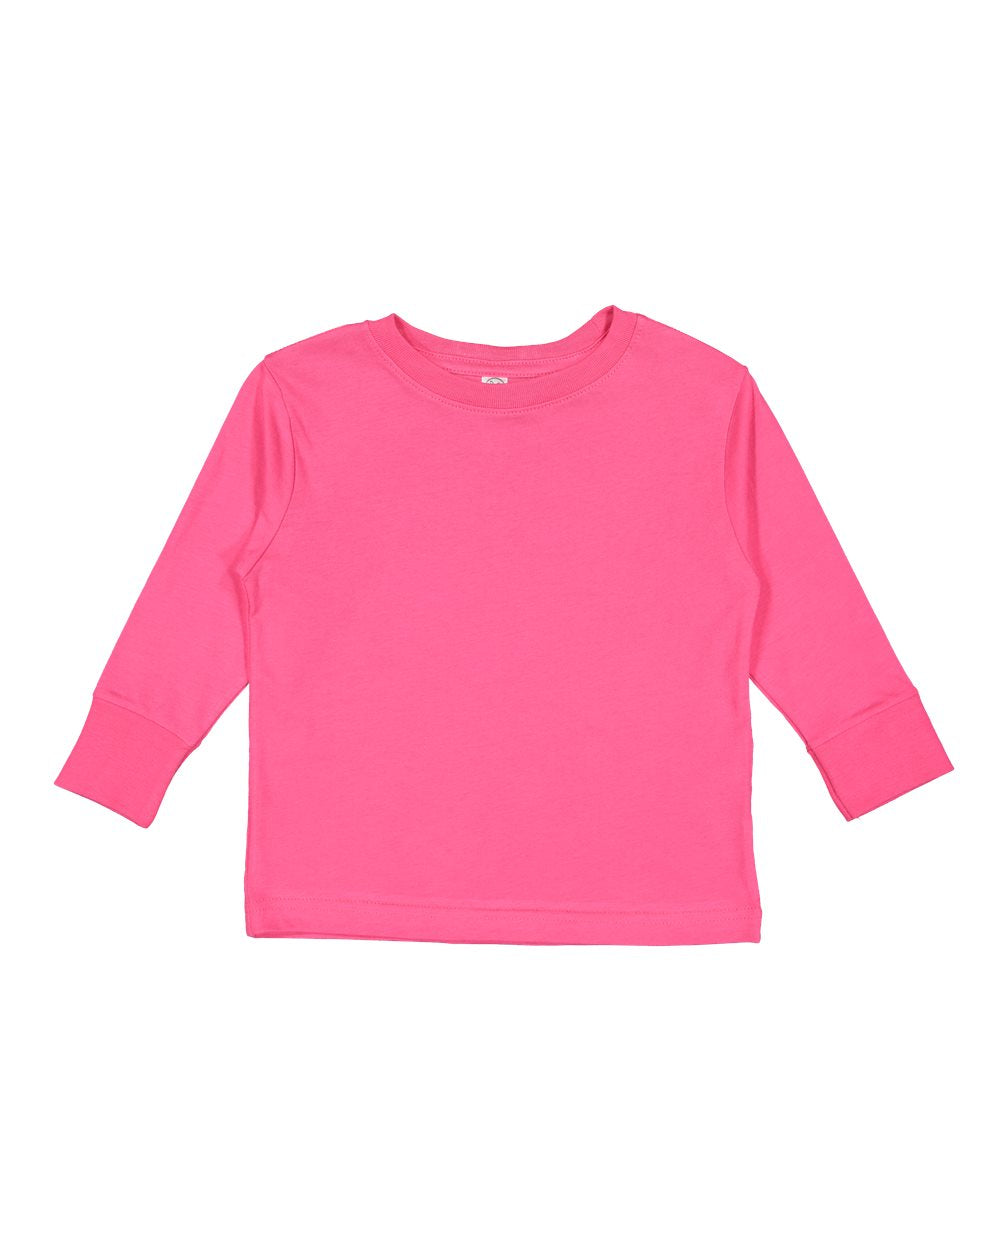 rabbit skins toddler long sleeve cotton jersey tee hot pink